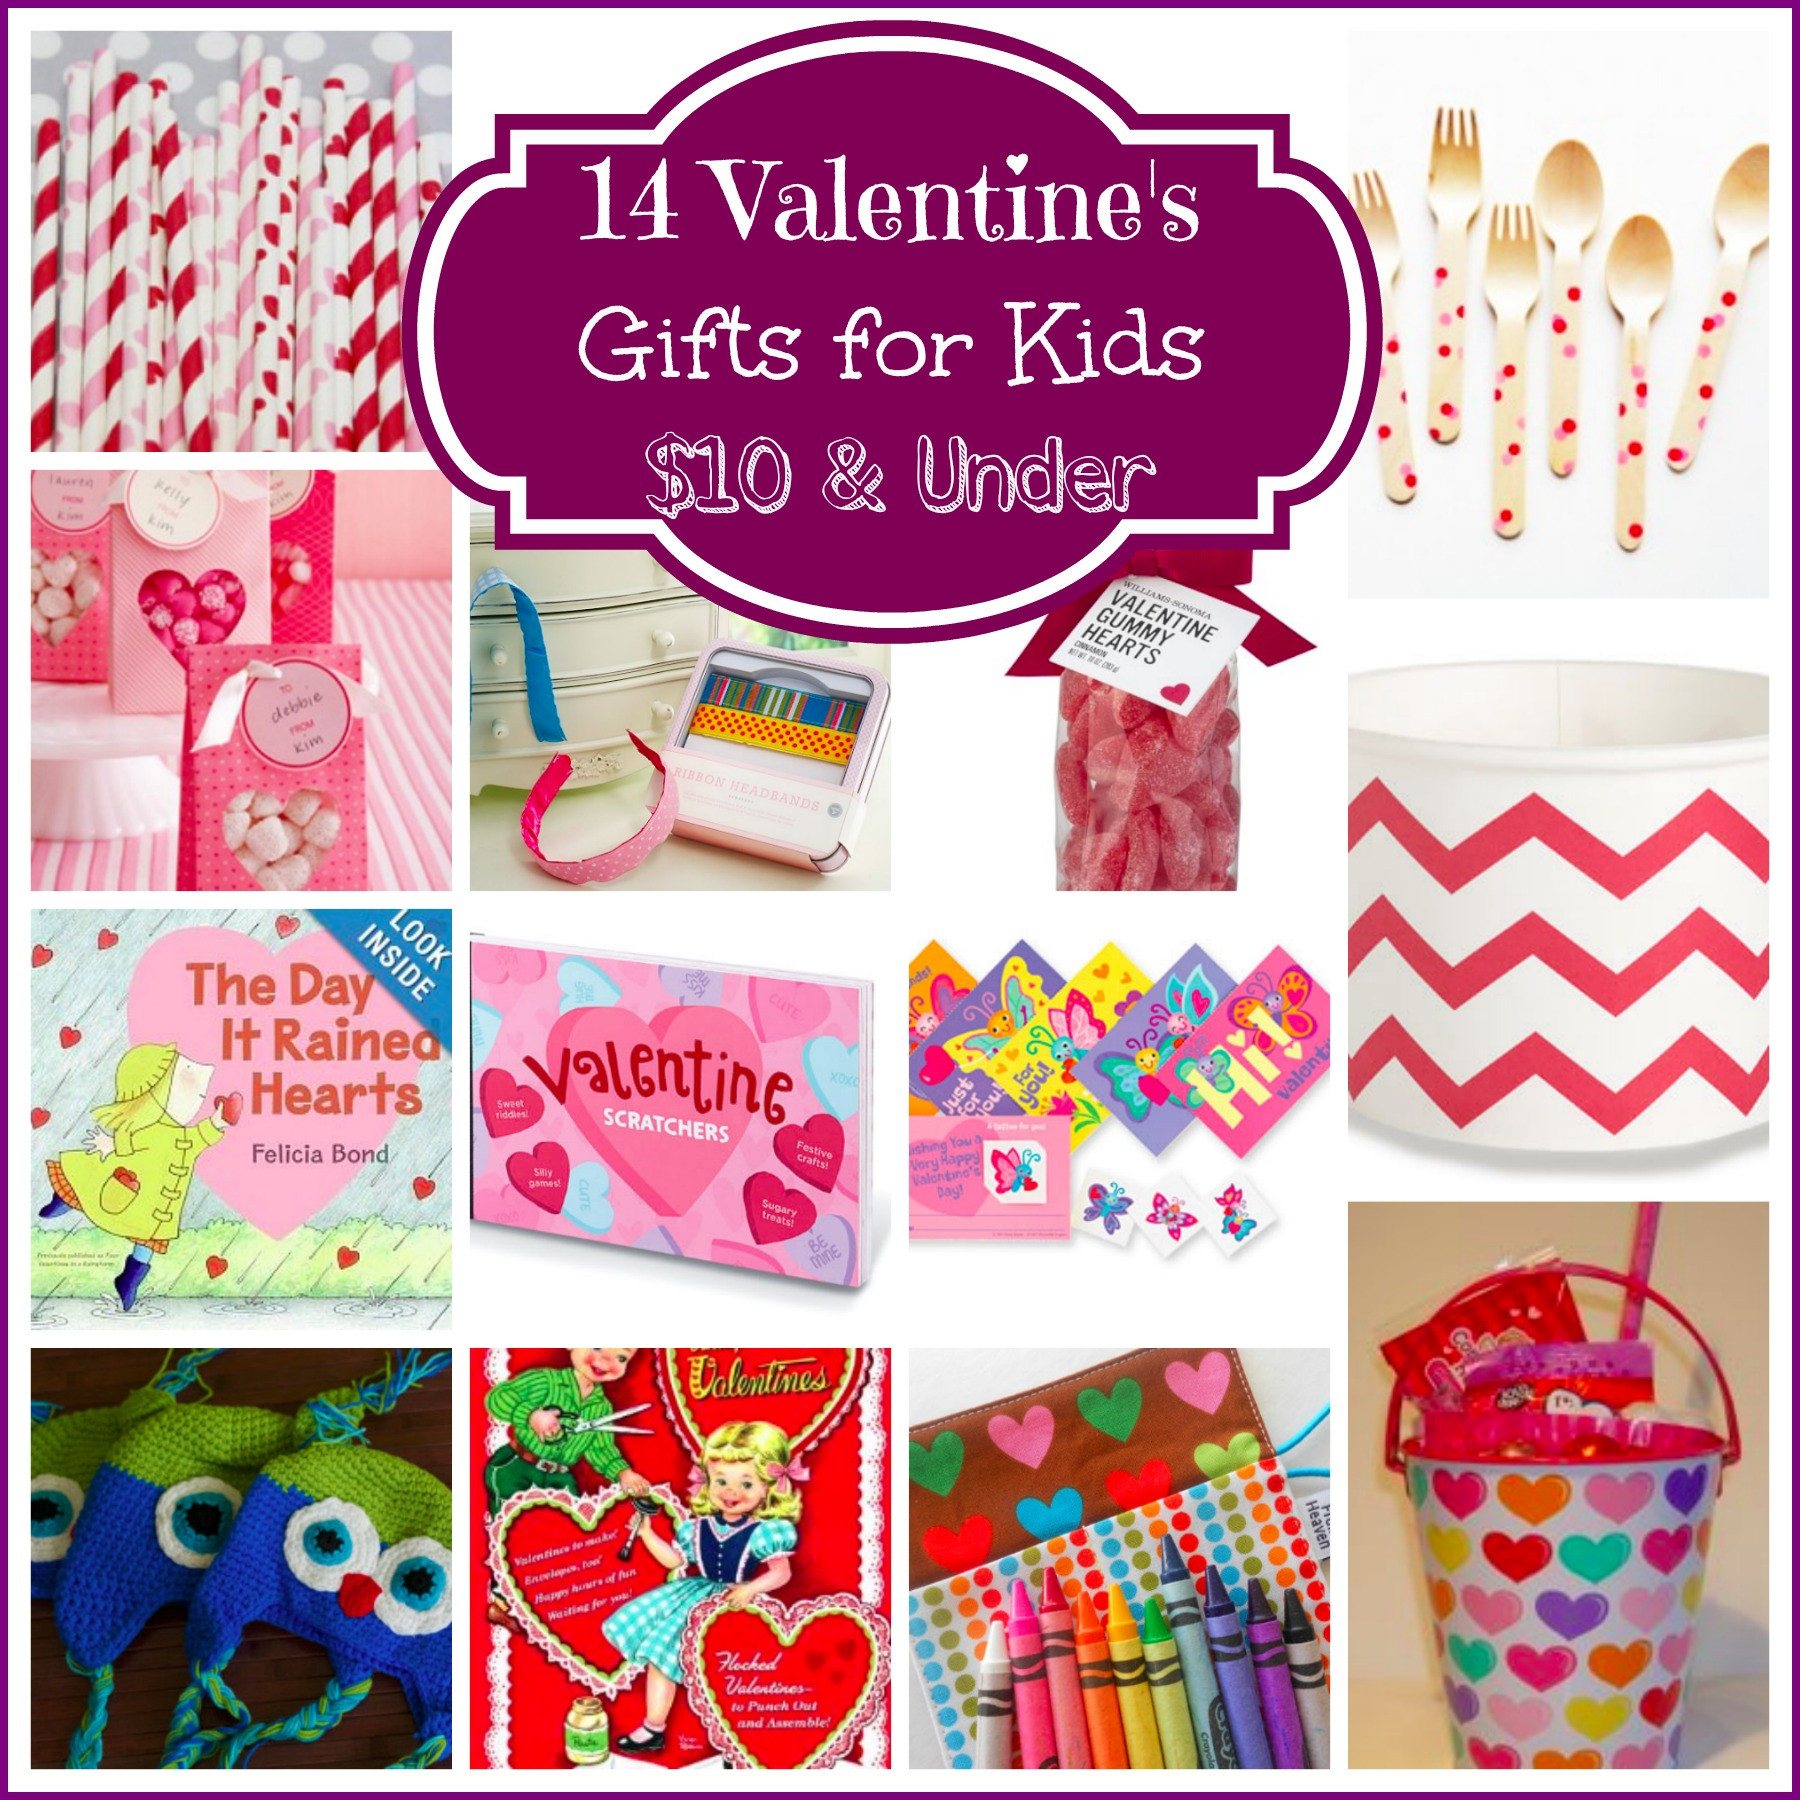 Kids Valentines Day Gifts
 14 Valentine’s Day Gifts for Kids $10 & Under